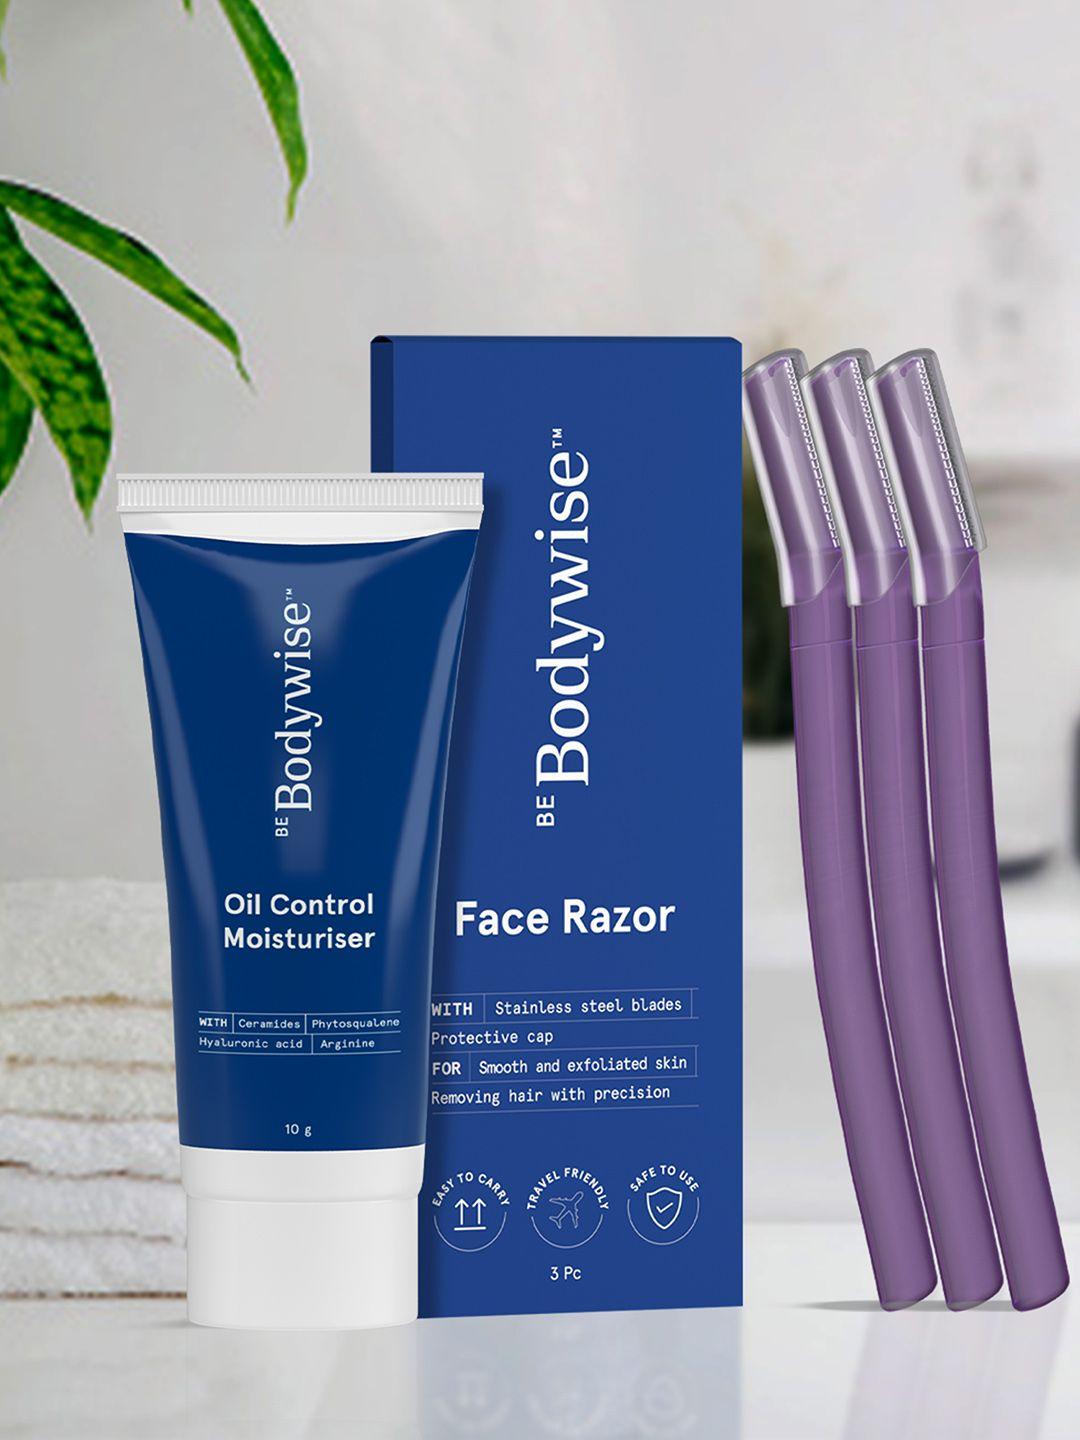 be bodywise women set of 3 face razor with oil control moisturiser